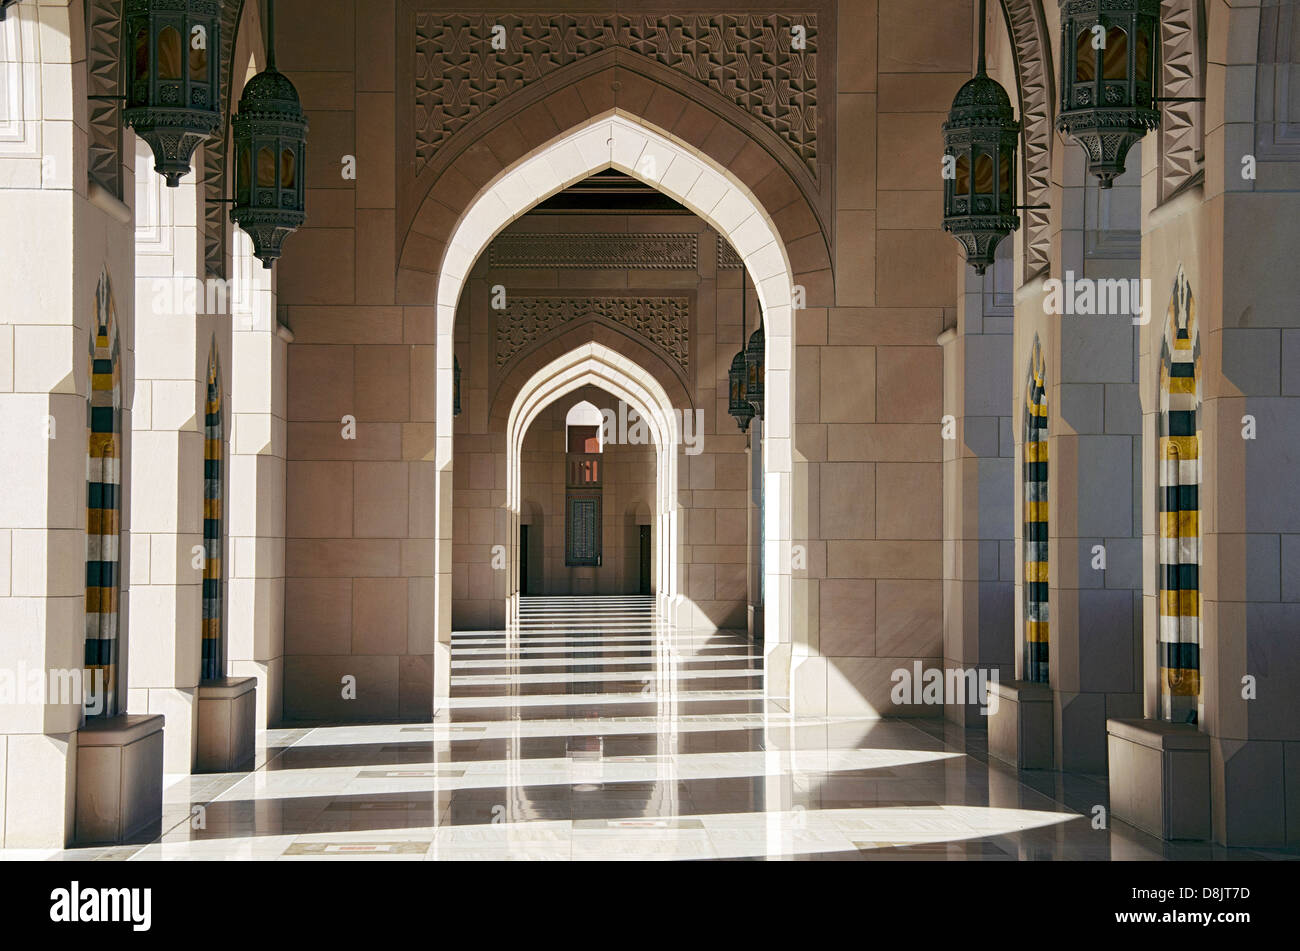 Sultan Qaboos Grand Mosque, Muscat, Oman Stock Photo